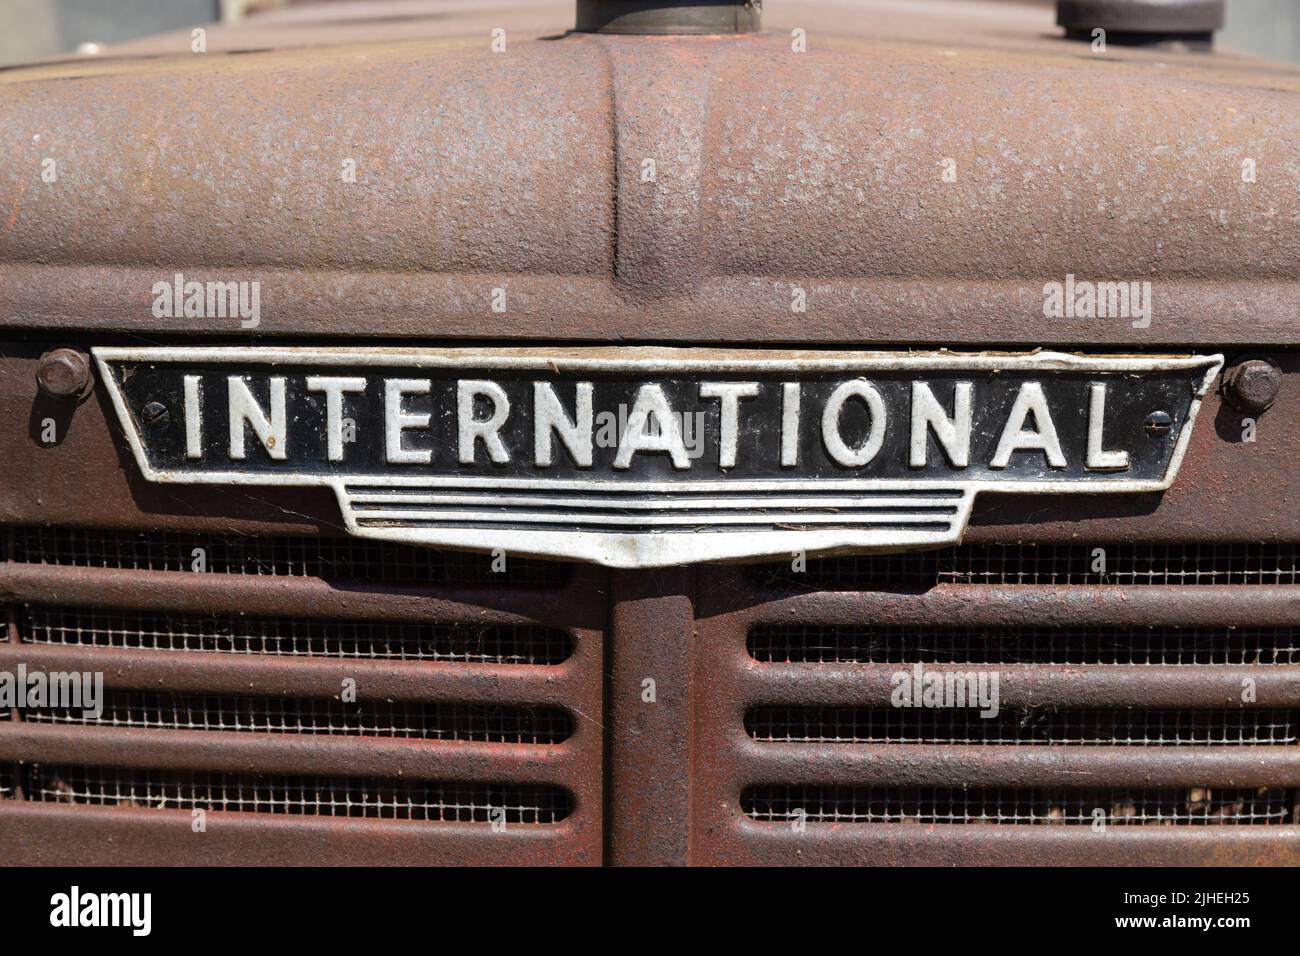 International badge logo on rusty caterpillar track truck Stock Photo